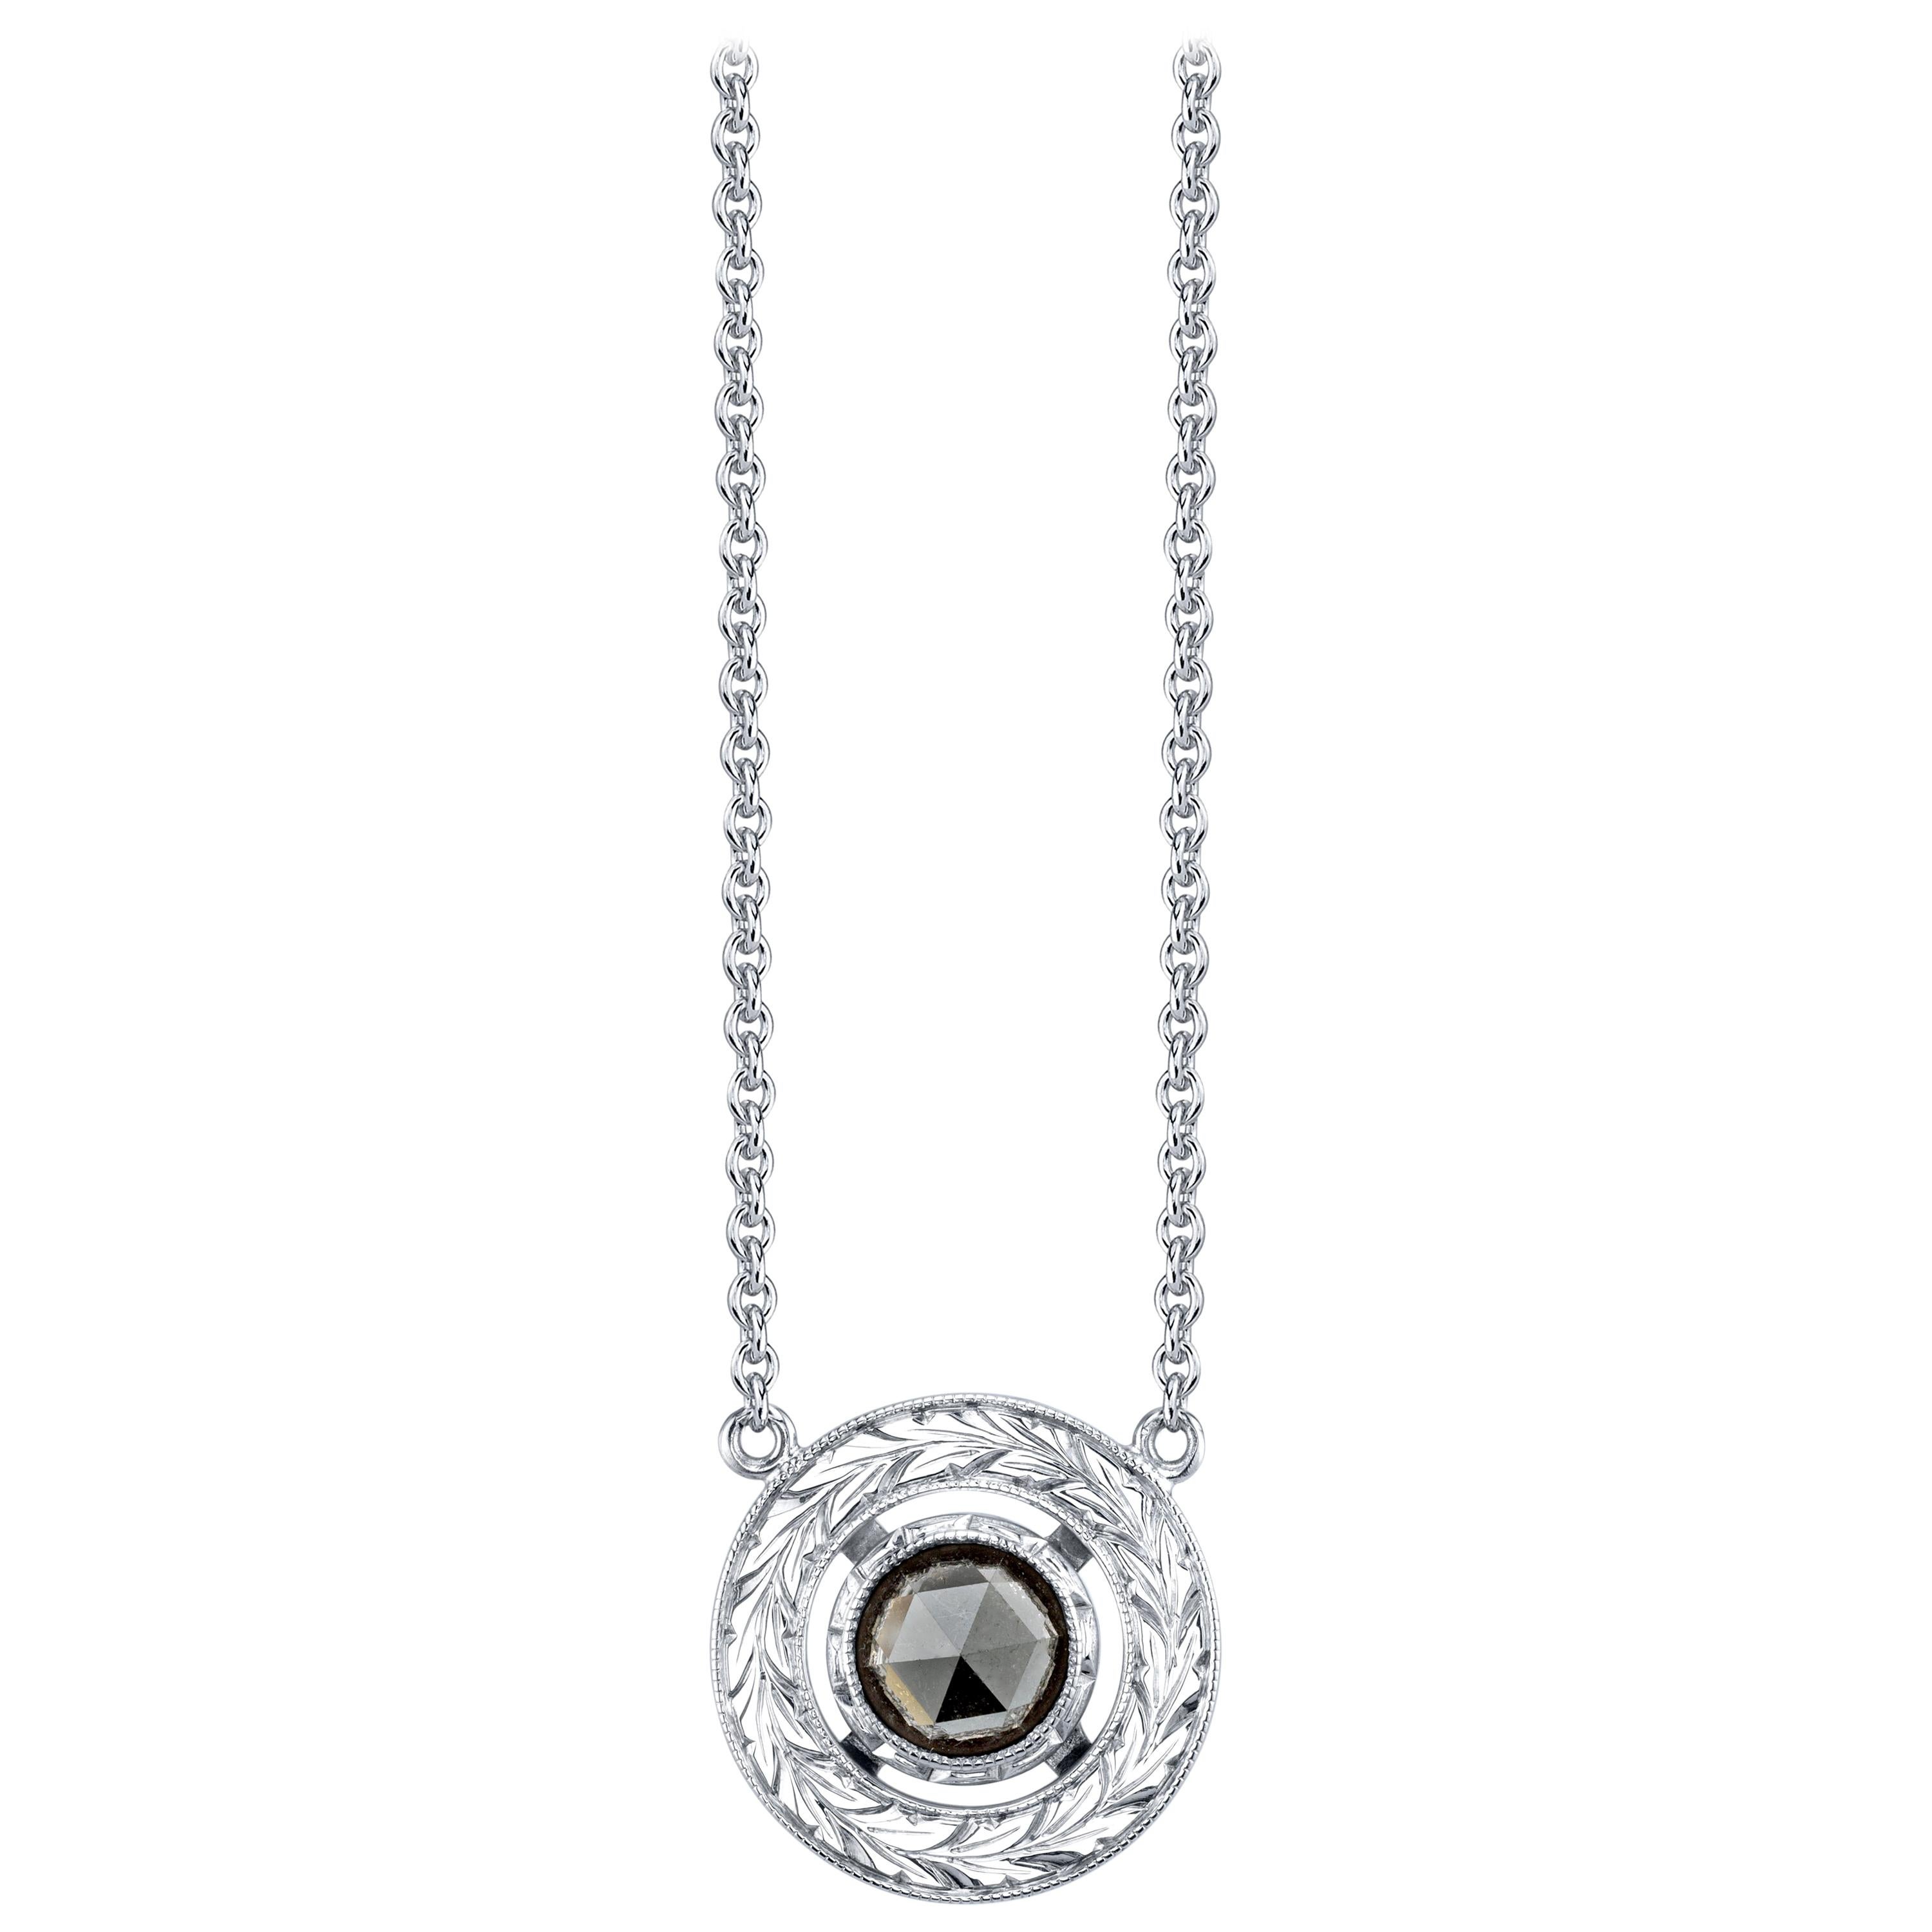 Rose Cut Black Diamond Necklace in 18k White Gold, 1.33 Carat